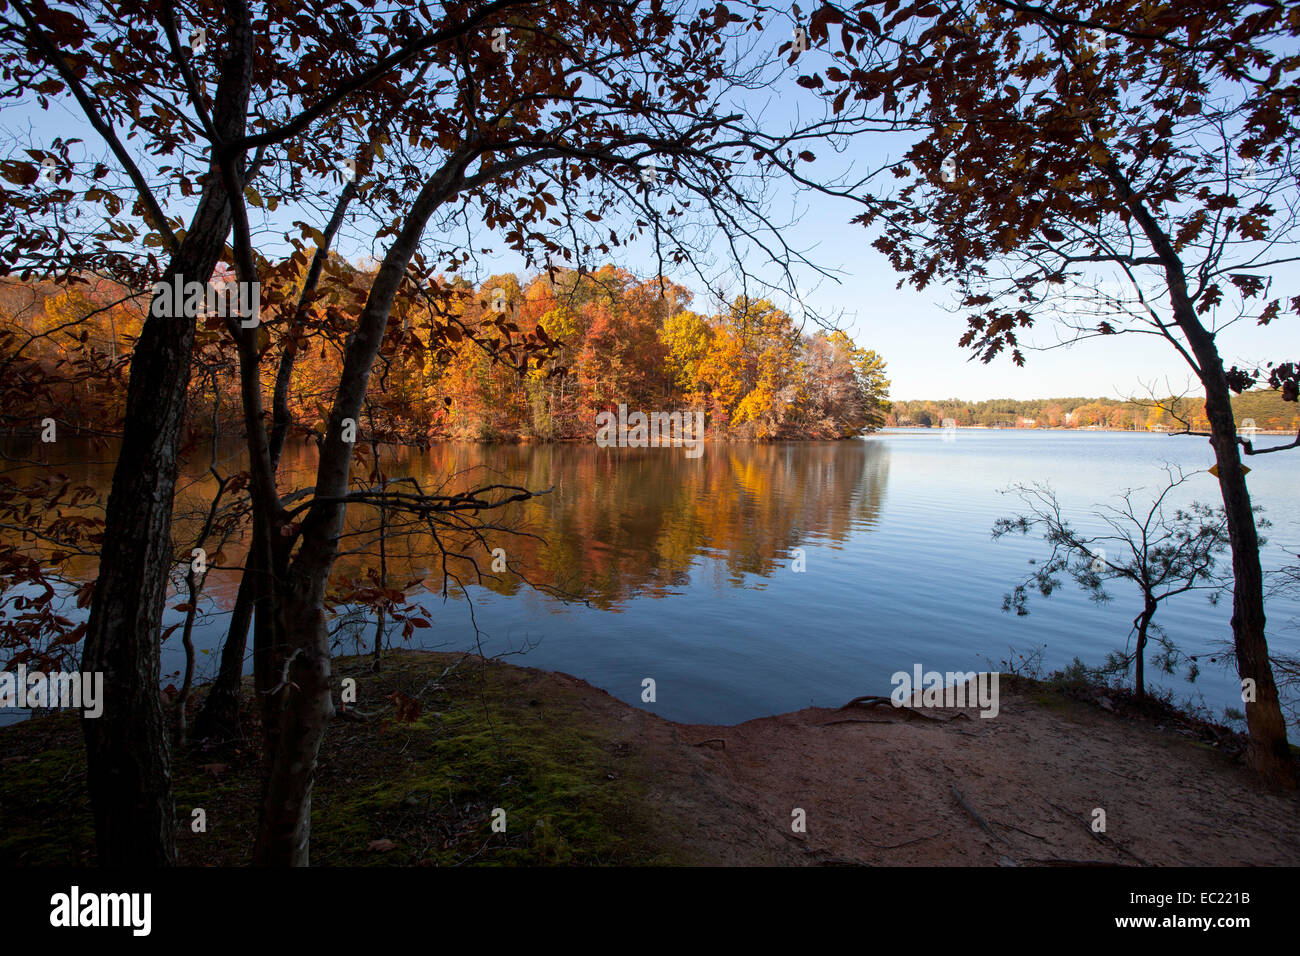 A scenic autumn view on Lake Norman in North Carolina Stock Photo